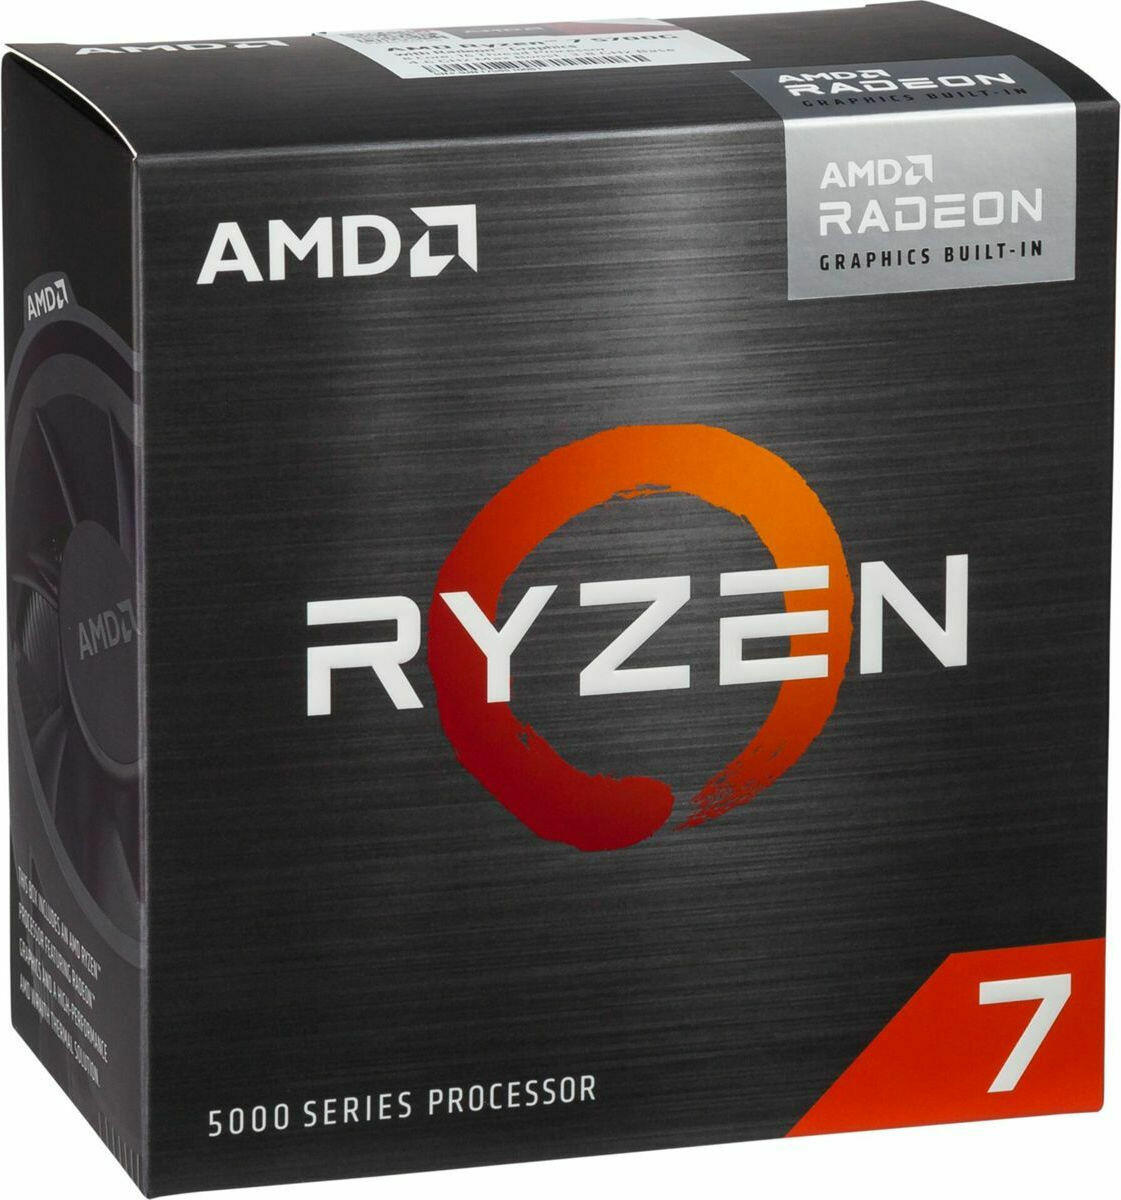 AMD Ryzen 7 5700G 3.8GHz Επεξεργαστής 8 Πυρήνων για Socket AM4 σε Κουτί